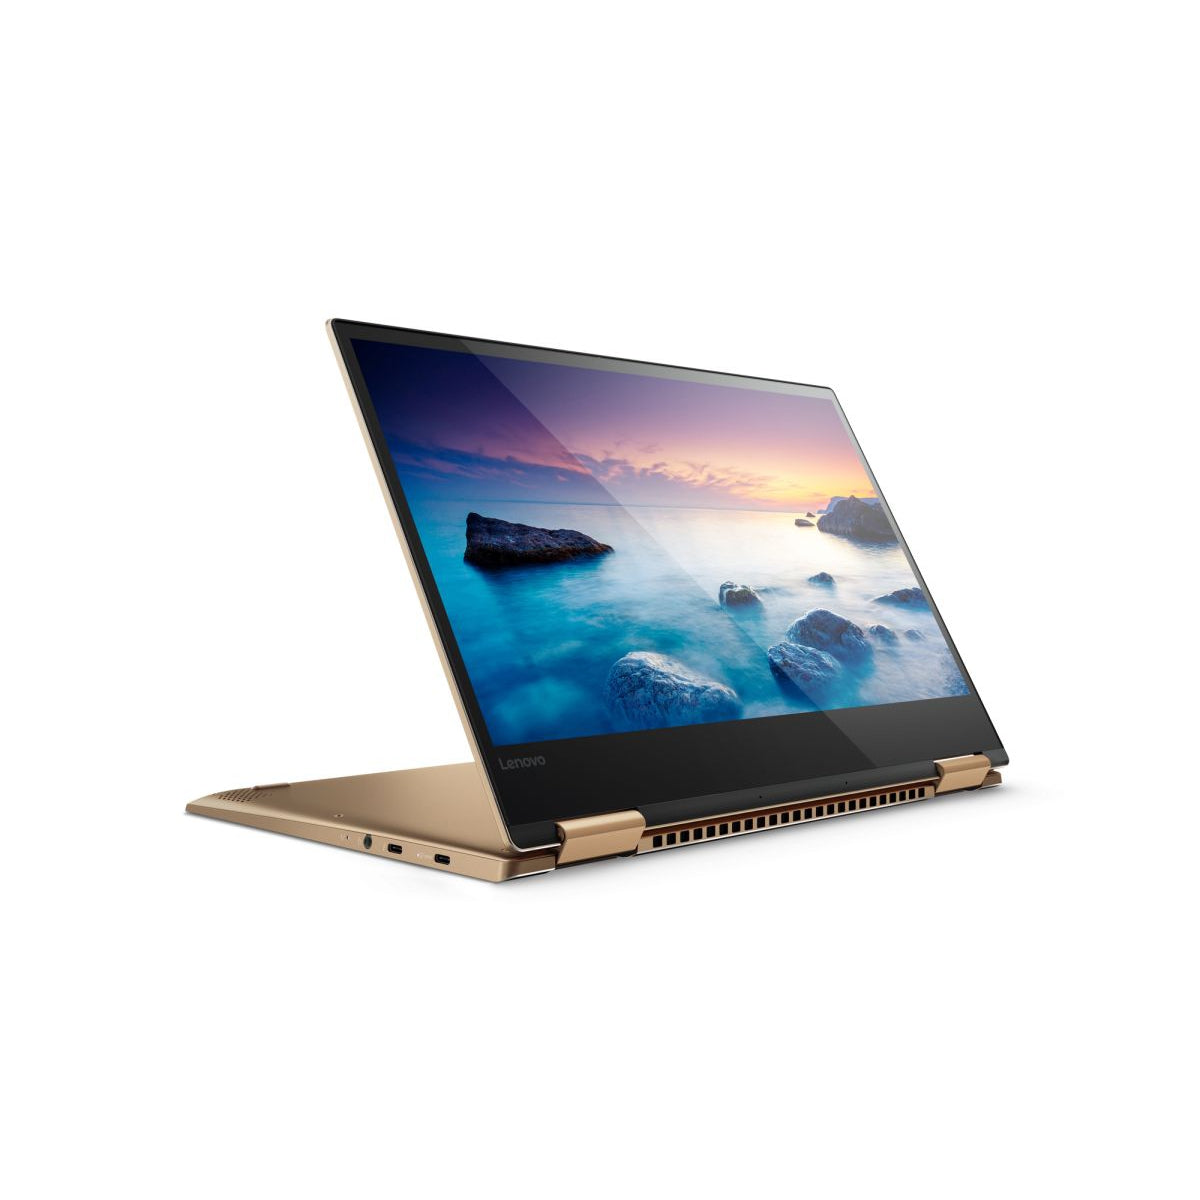 Lenovo Yoga 720 Core i5 8250U 8GB 128GB 13.3 Inch Windows 10 Touchscreen Laptop, Gold